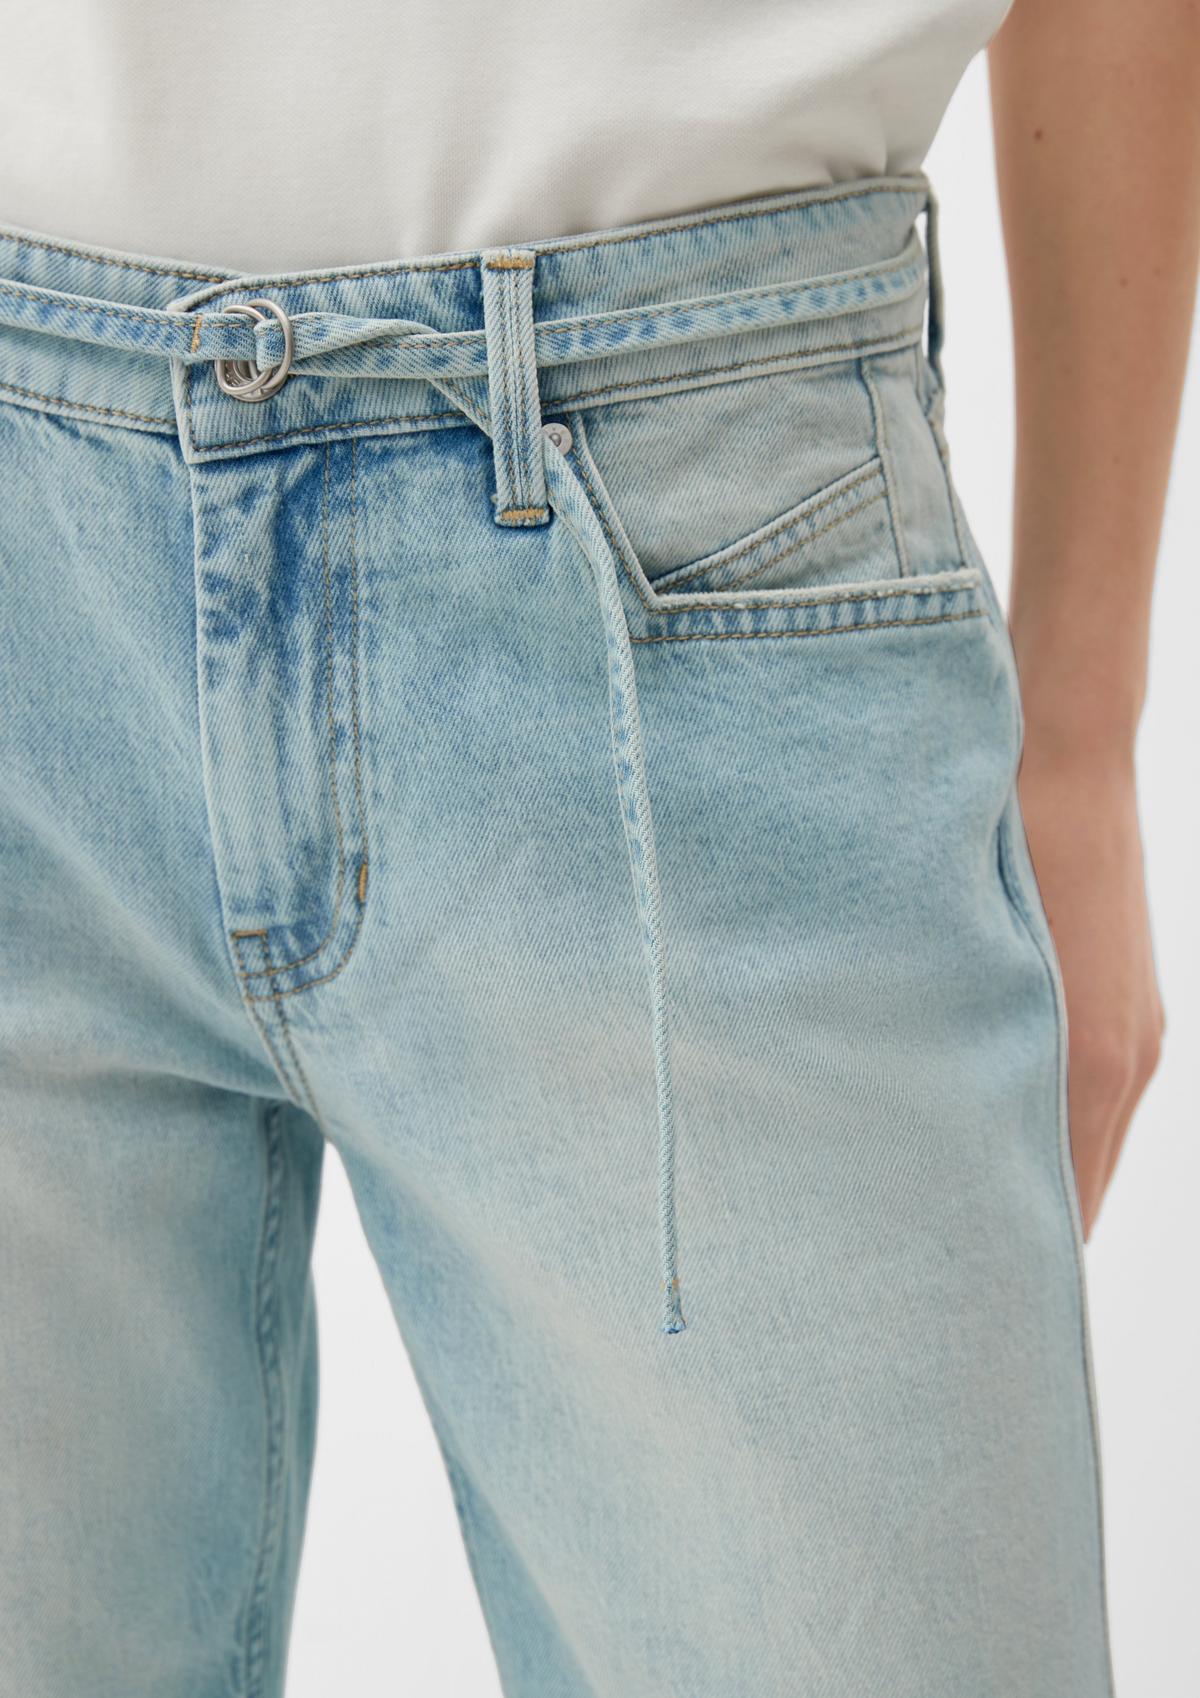 s.Oliver Karolin : jean de style 5 poches à jambes droites